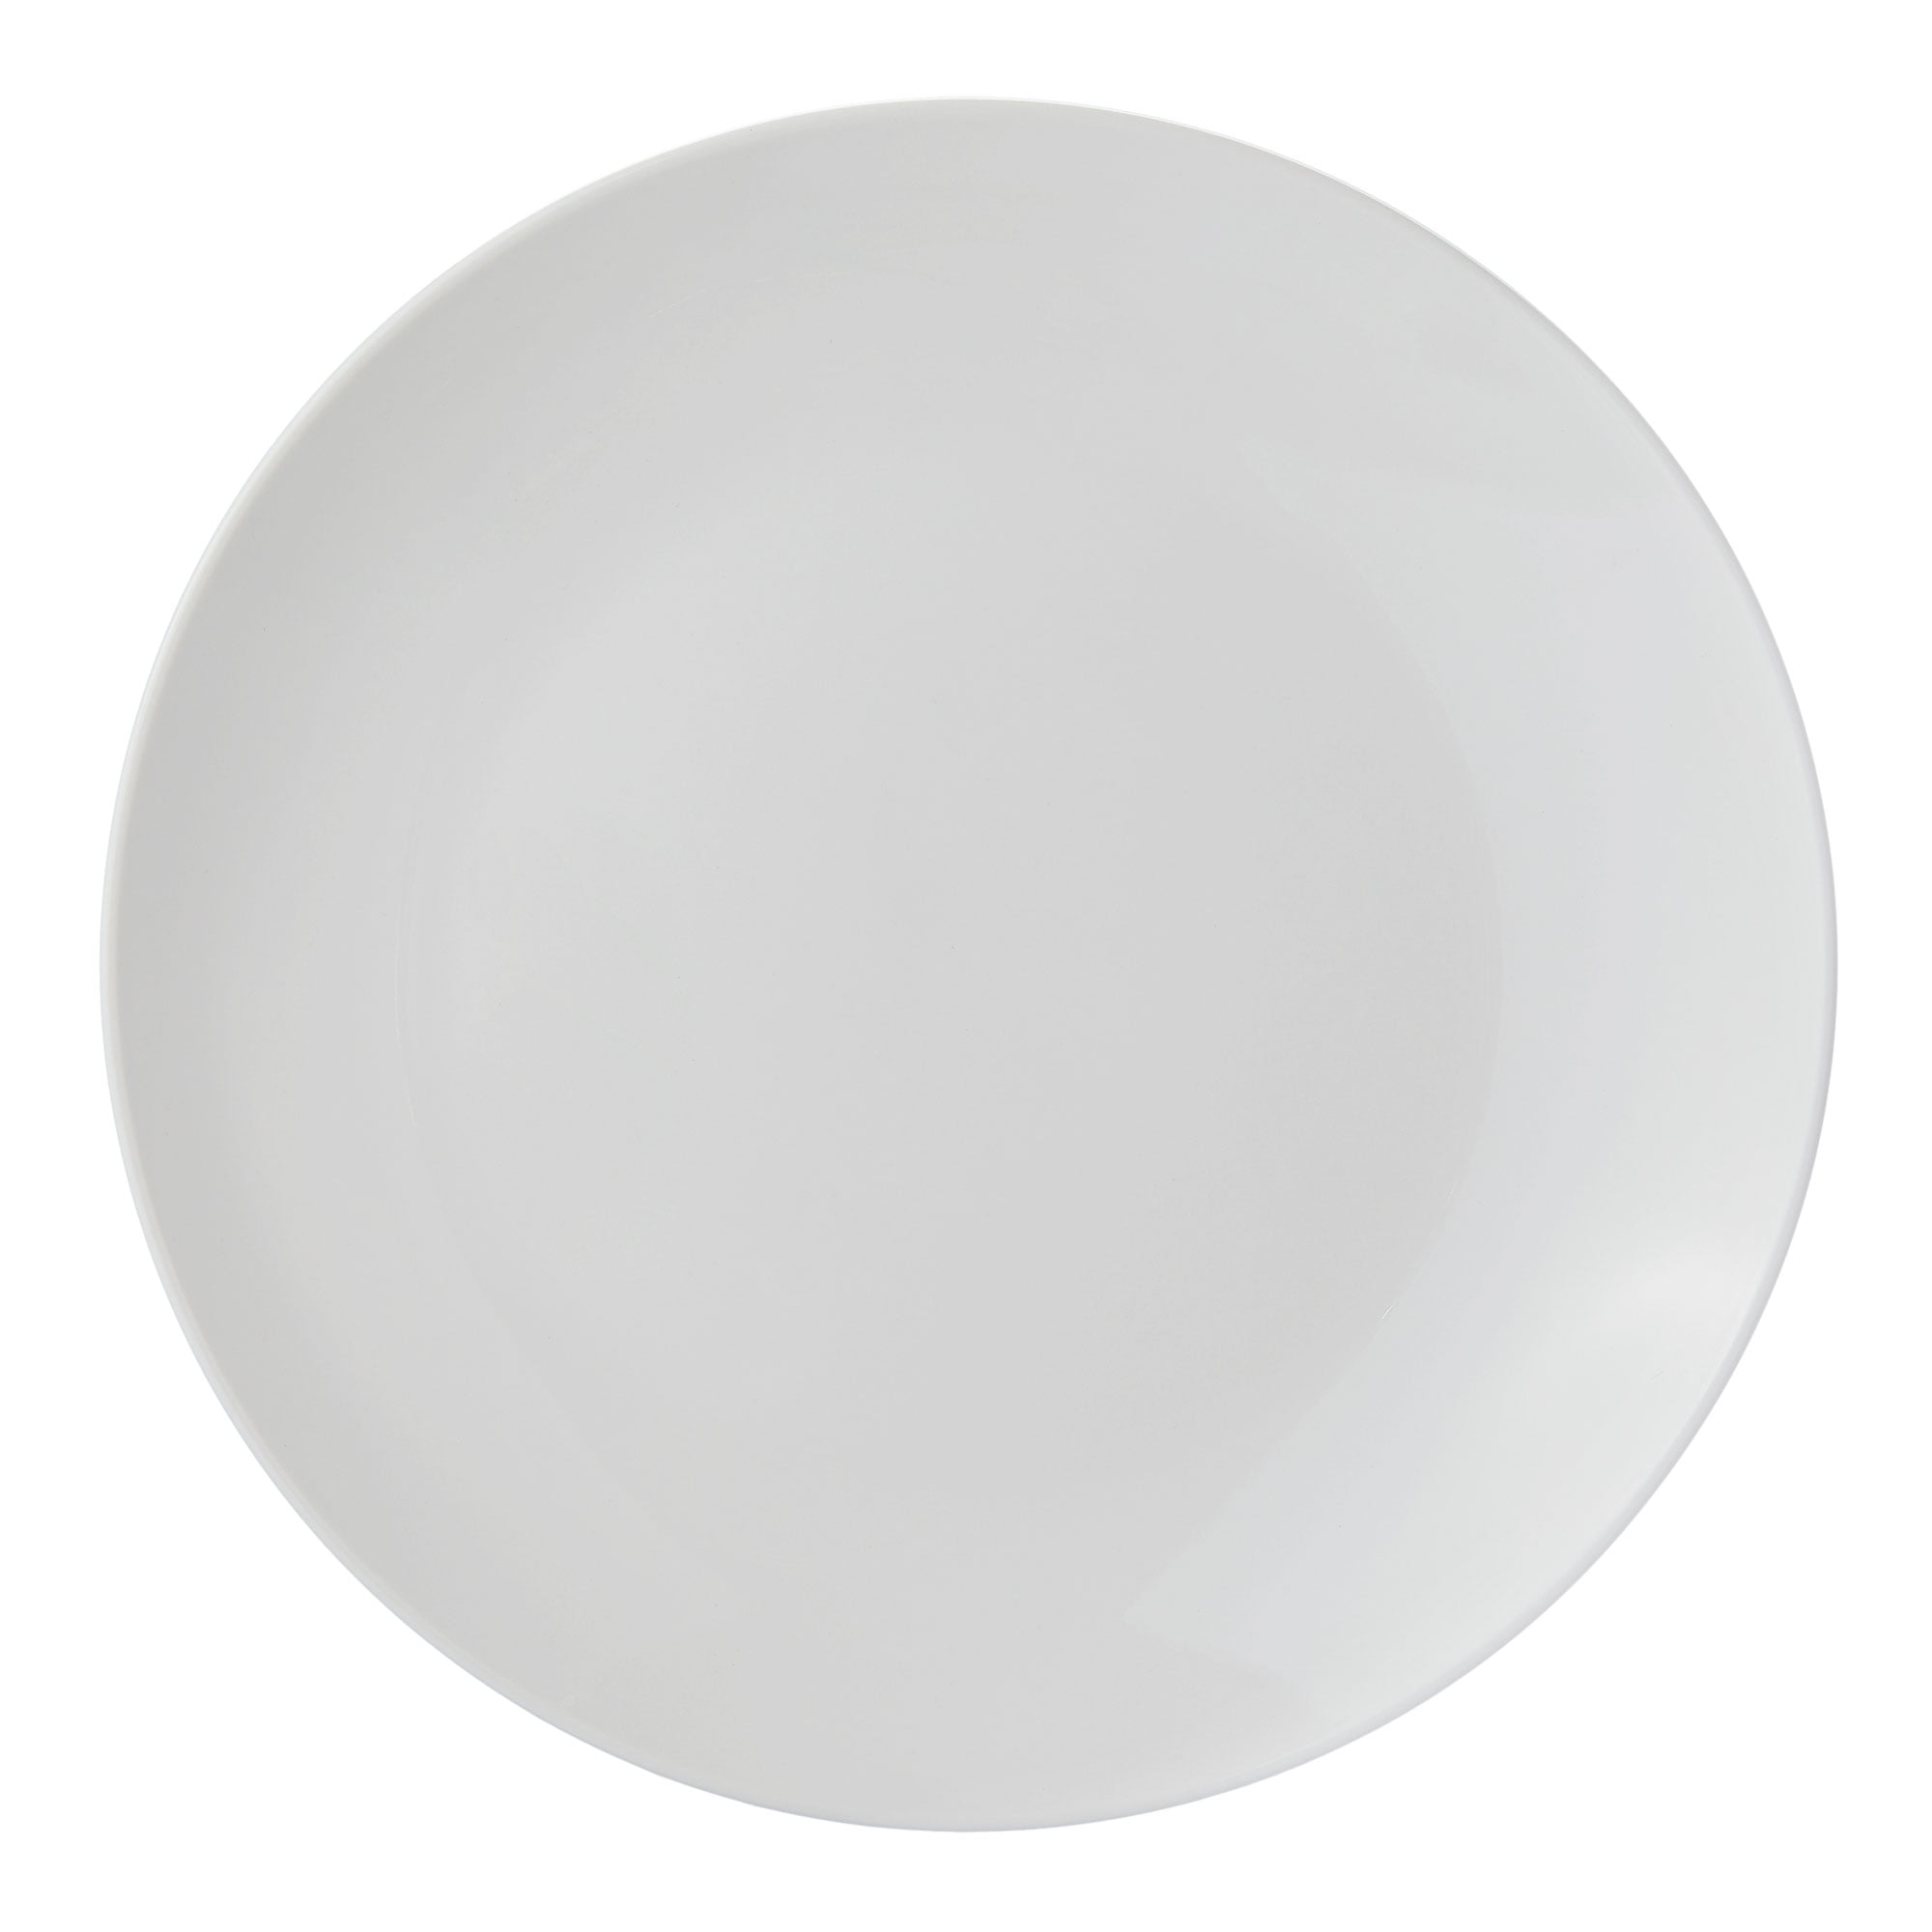 Mainstays Glazed White Round Stoneware Dinner Plate, 10.3